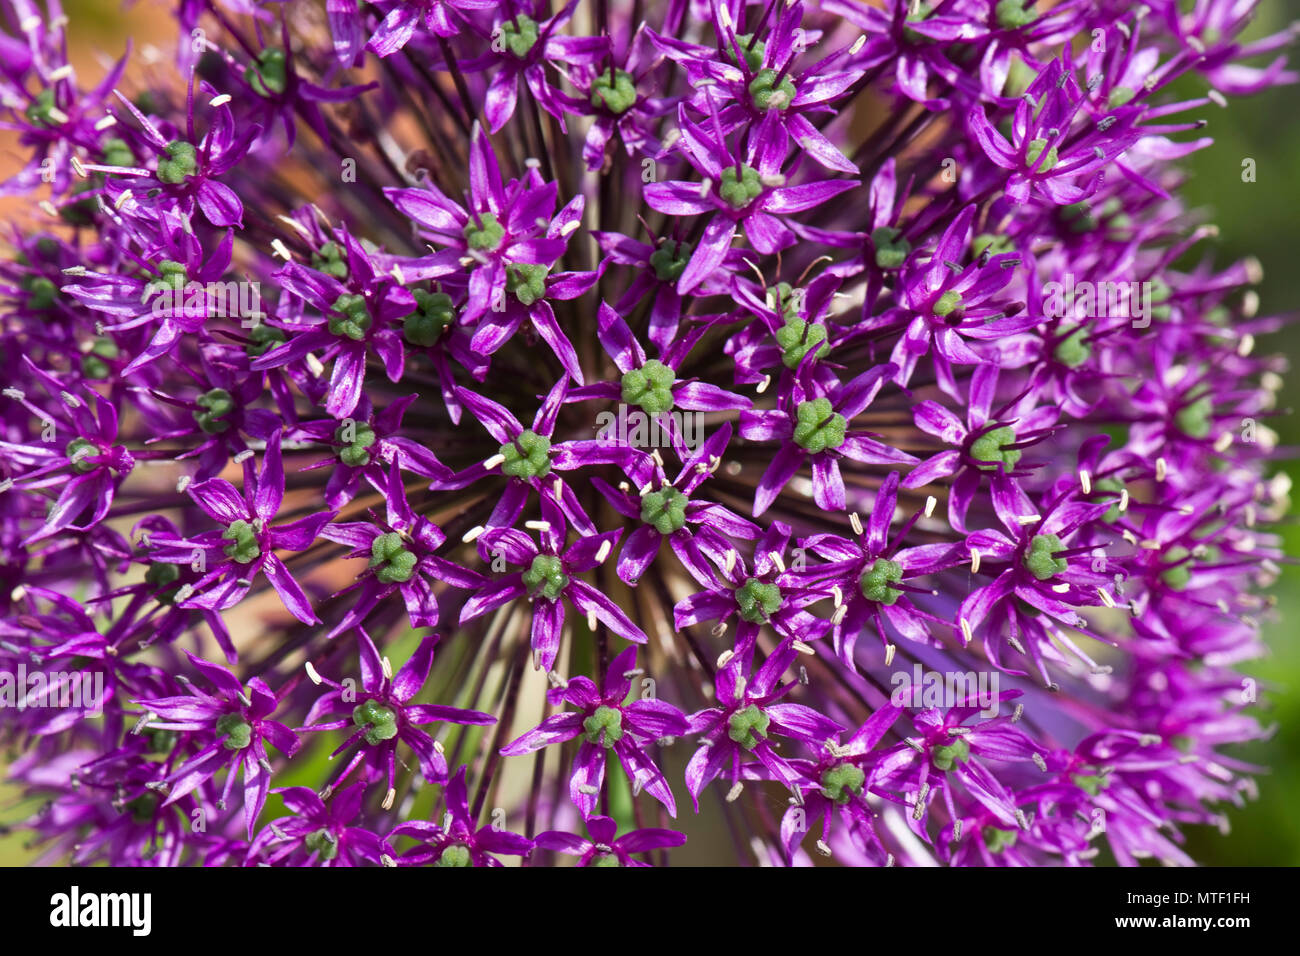 Spherical flowerheads of Allium 'Purple Sensation' tall bulbous perennial garden plants, May Stock Photo